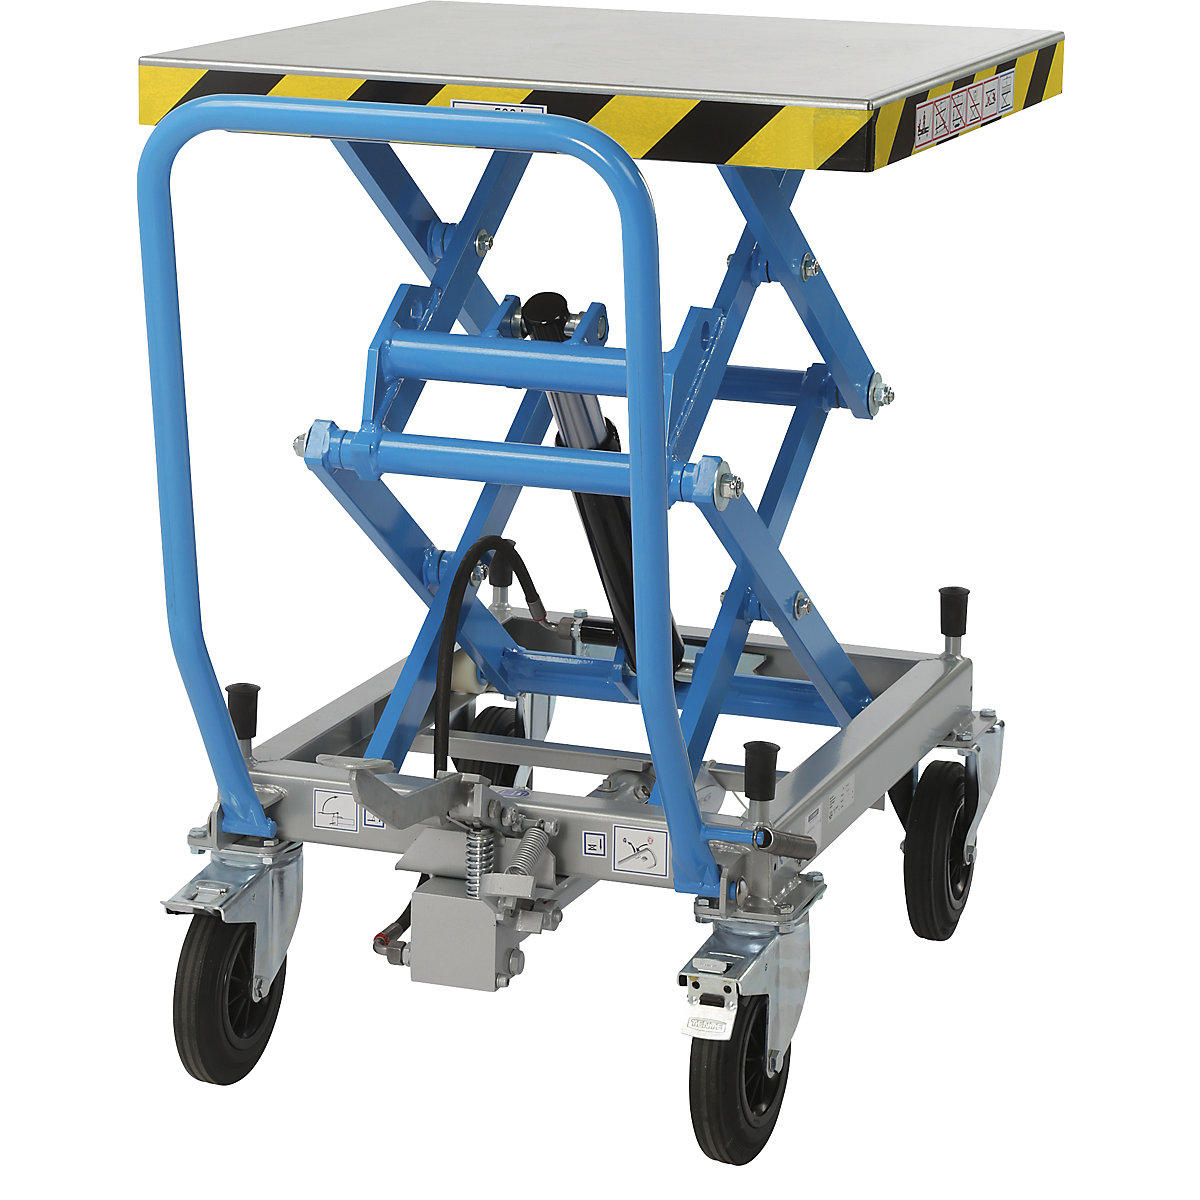 Double scissor lifting platform truck – eurokraft pro, max. load 500 kg, lifting range 460 – 1400 mm, solid rubber tyres